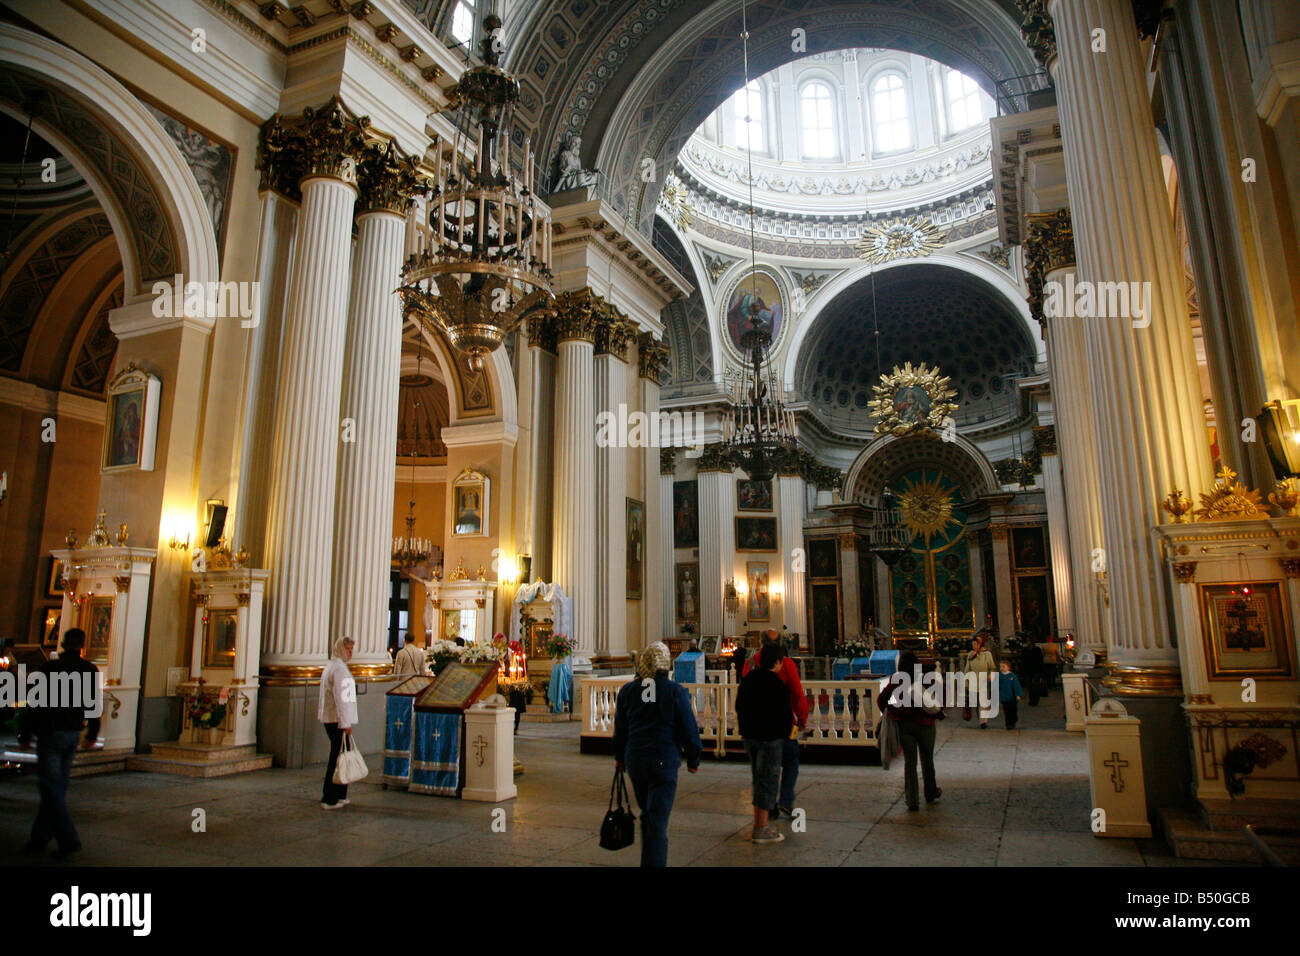 Aug 2008 - The interior of the Alexander Nevsky Monastery St Petersburg Russia Stock Photo